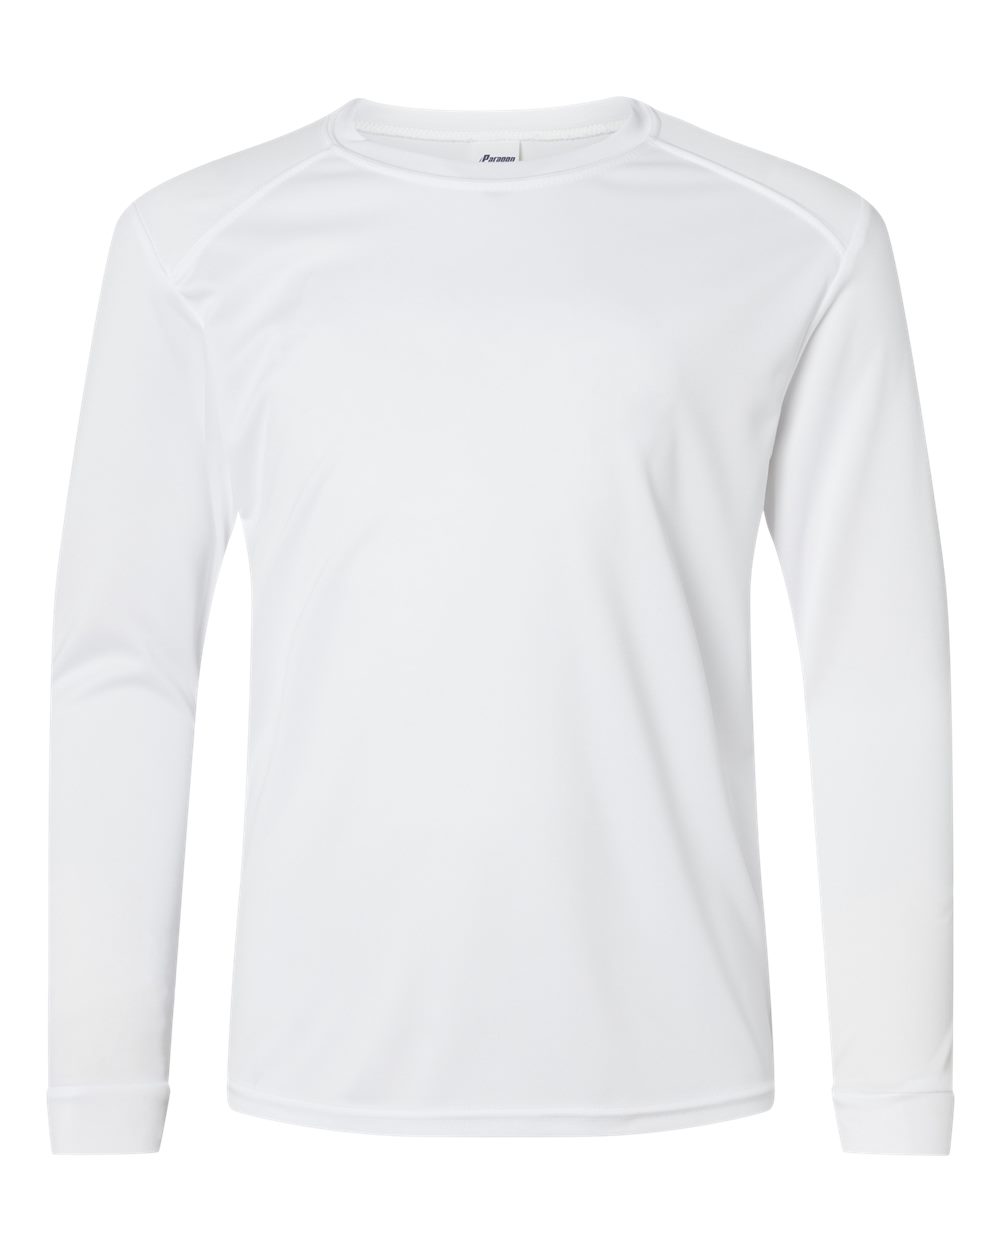 Paragon - Long Islander Performance Long Sleeve T-Shirt